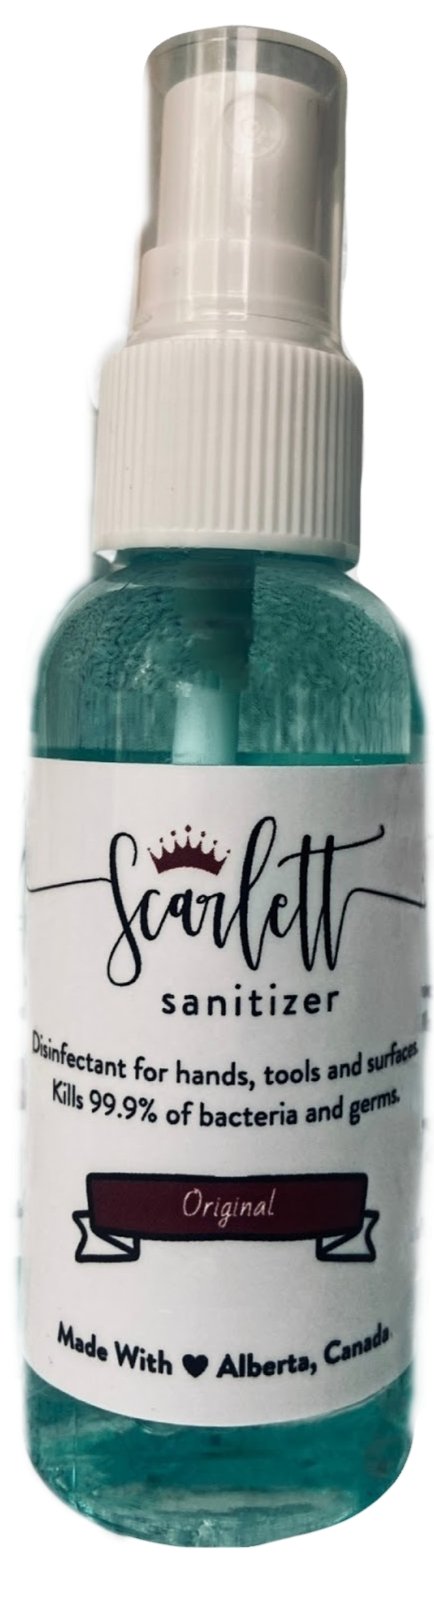 Scarlett Sanitizer - Scarlett Hair Extensions